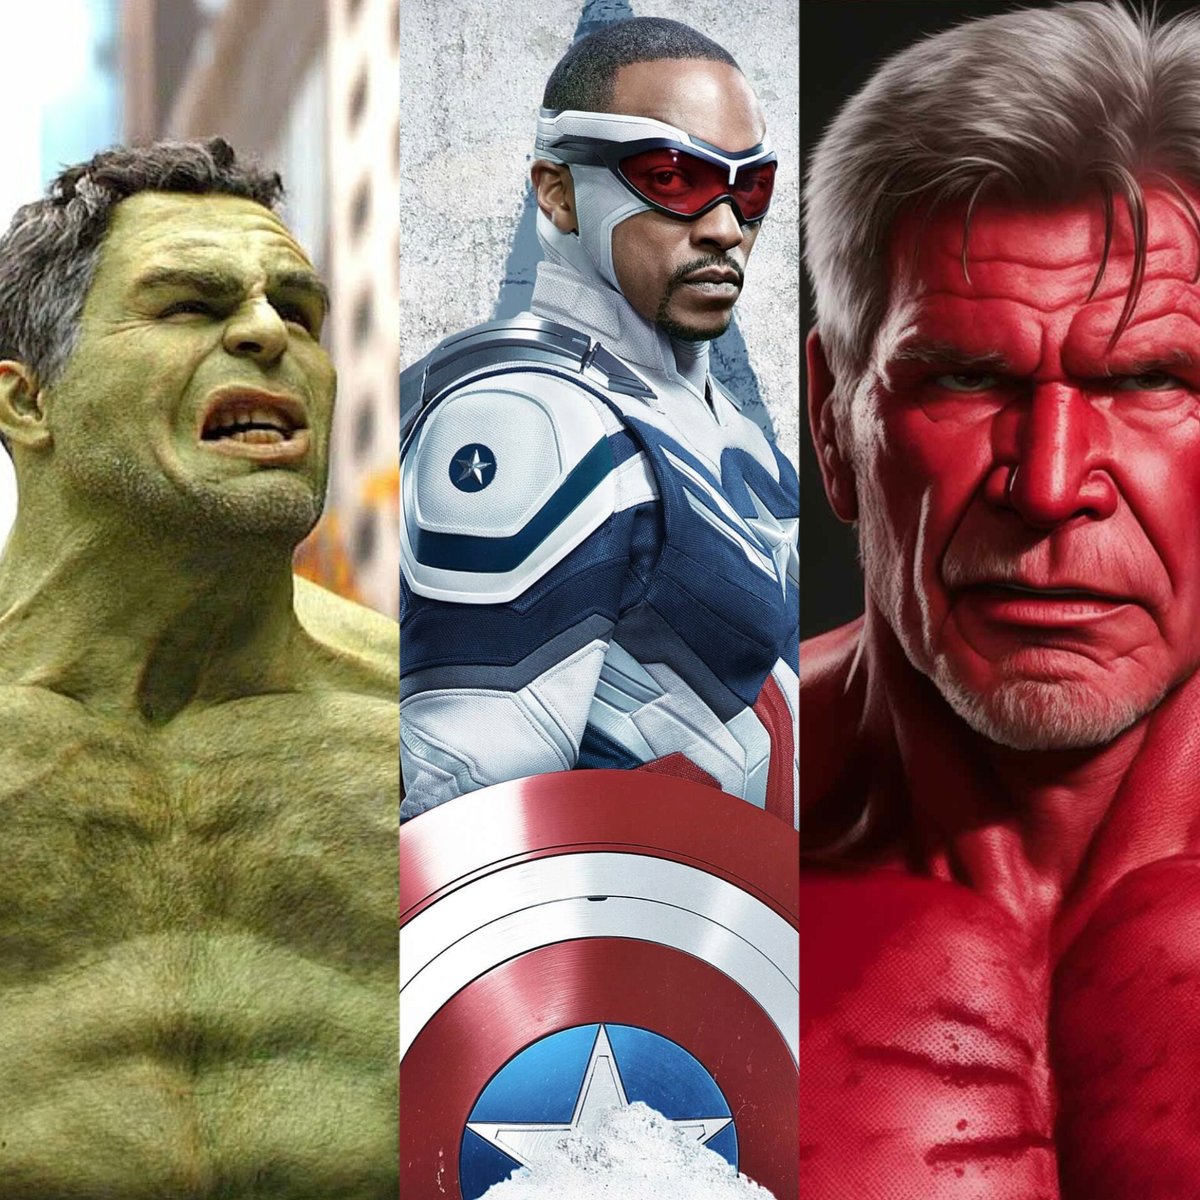 Ahora sí va a ser LA PELEA

#MarkRuffalo #Hulk #Captainamerica4